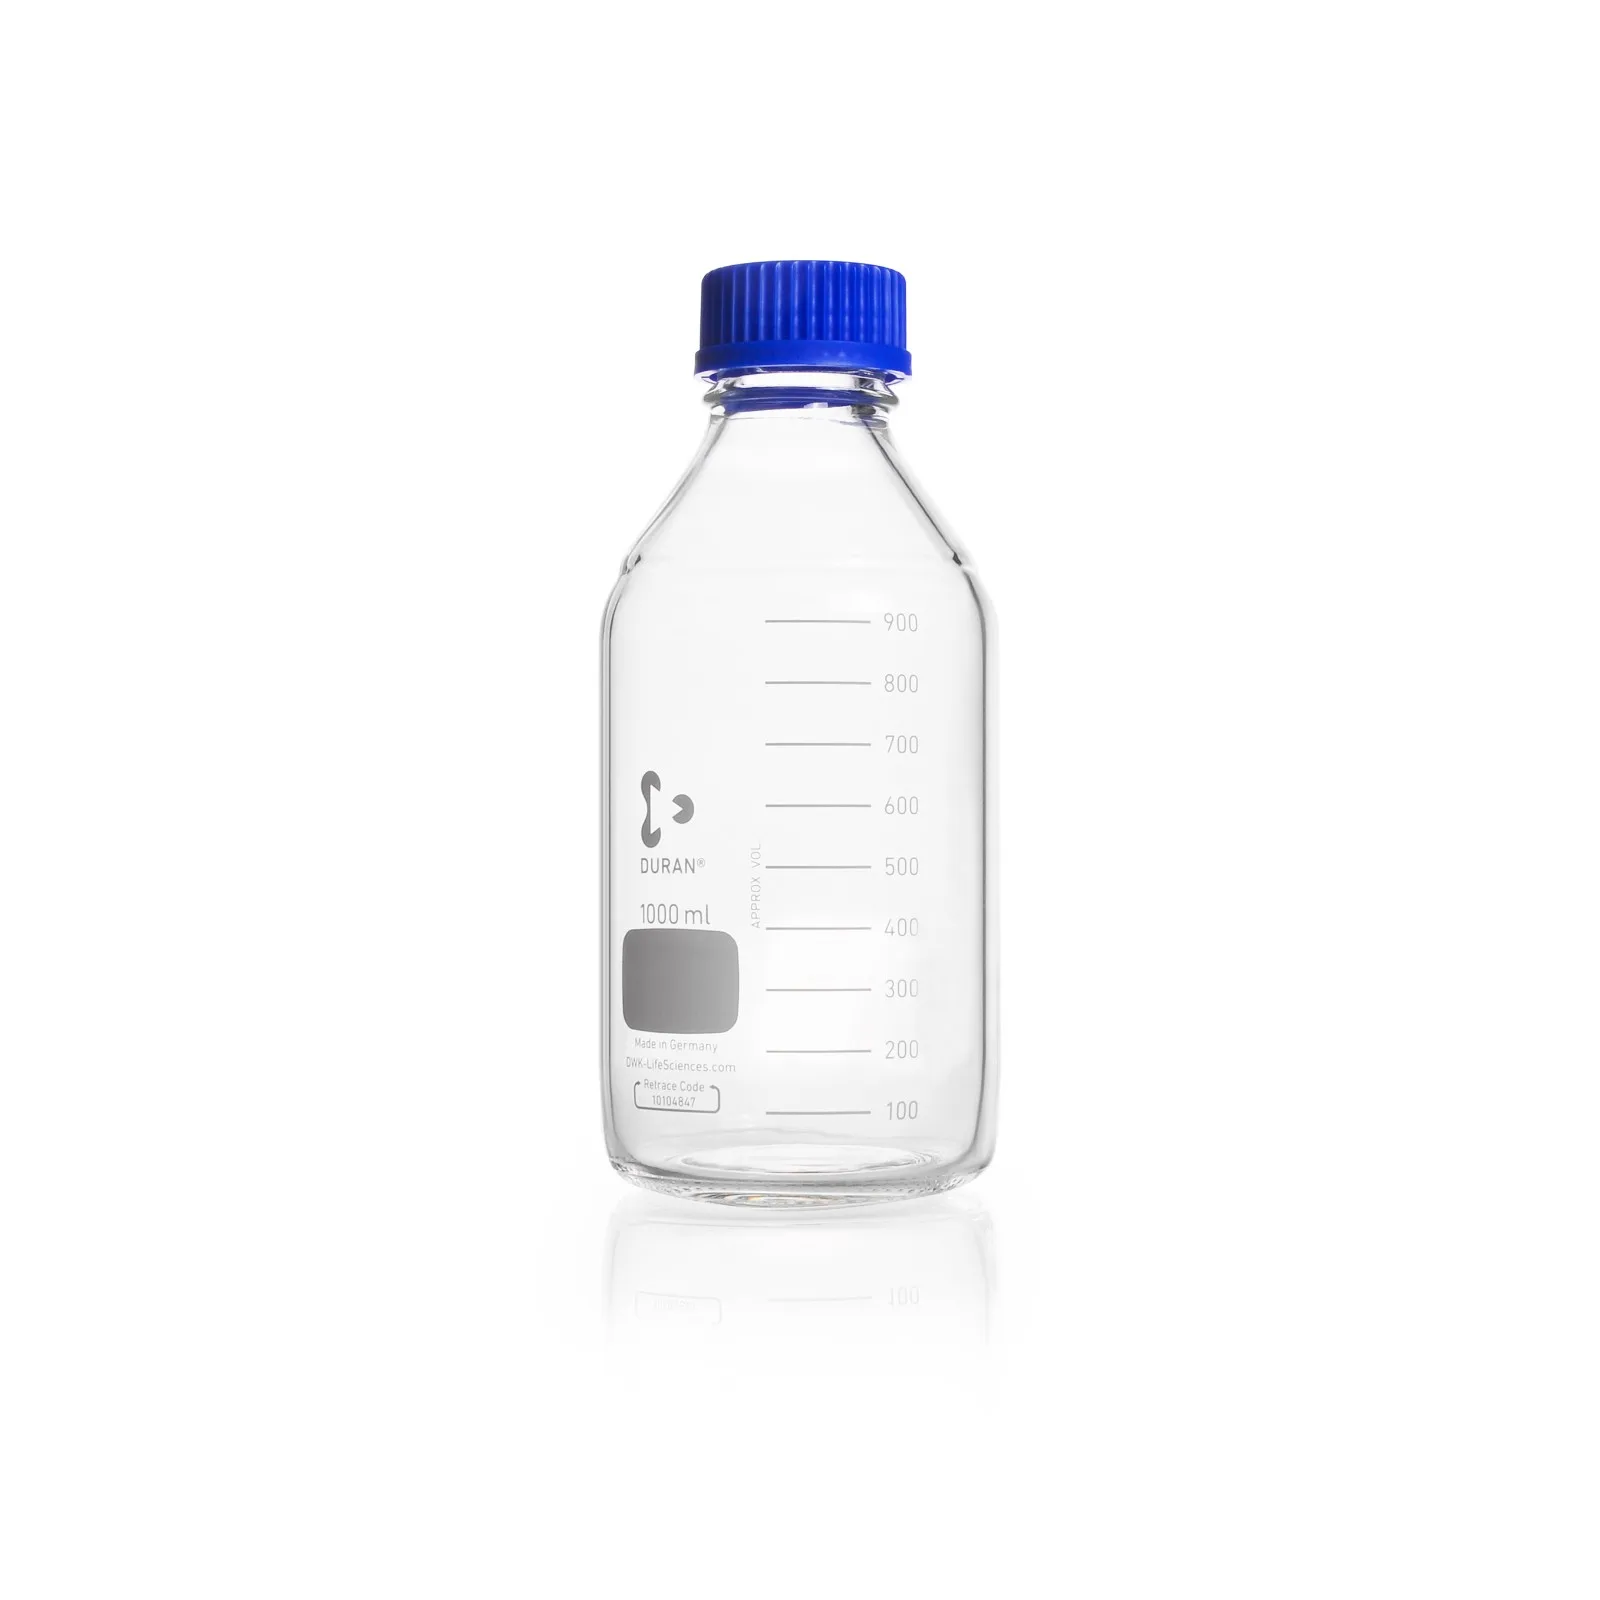 Duran/Schott Multipurpose Lab Glass Blue Cap Reagent Bottle High Borosilicate 3.3 Glass Chemical Resistance Sturdy Durable